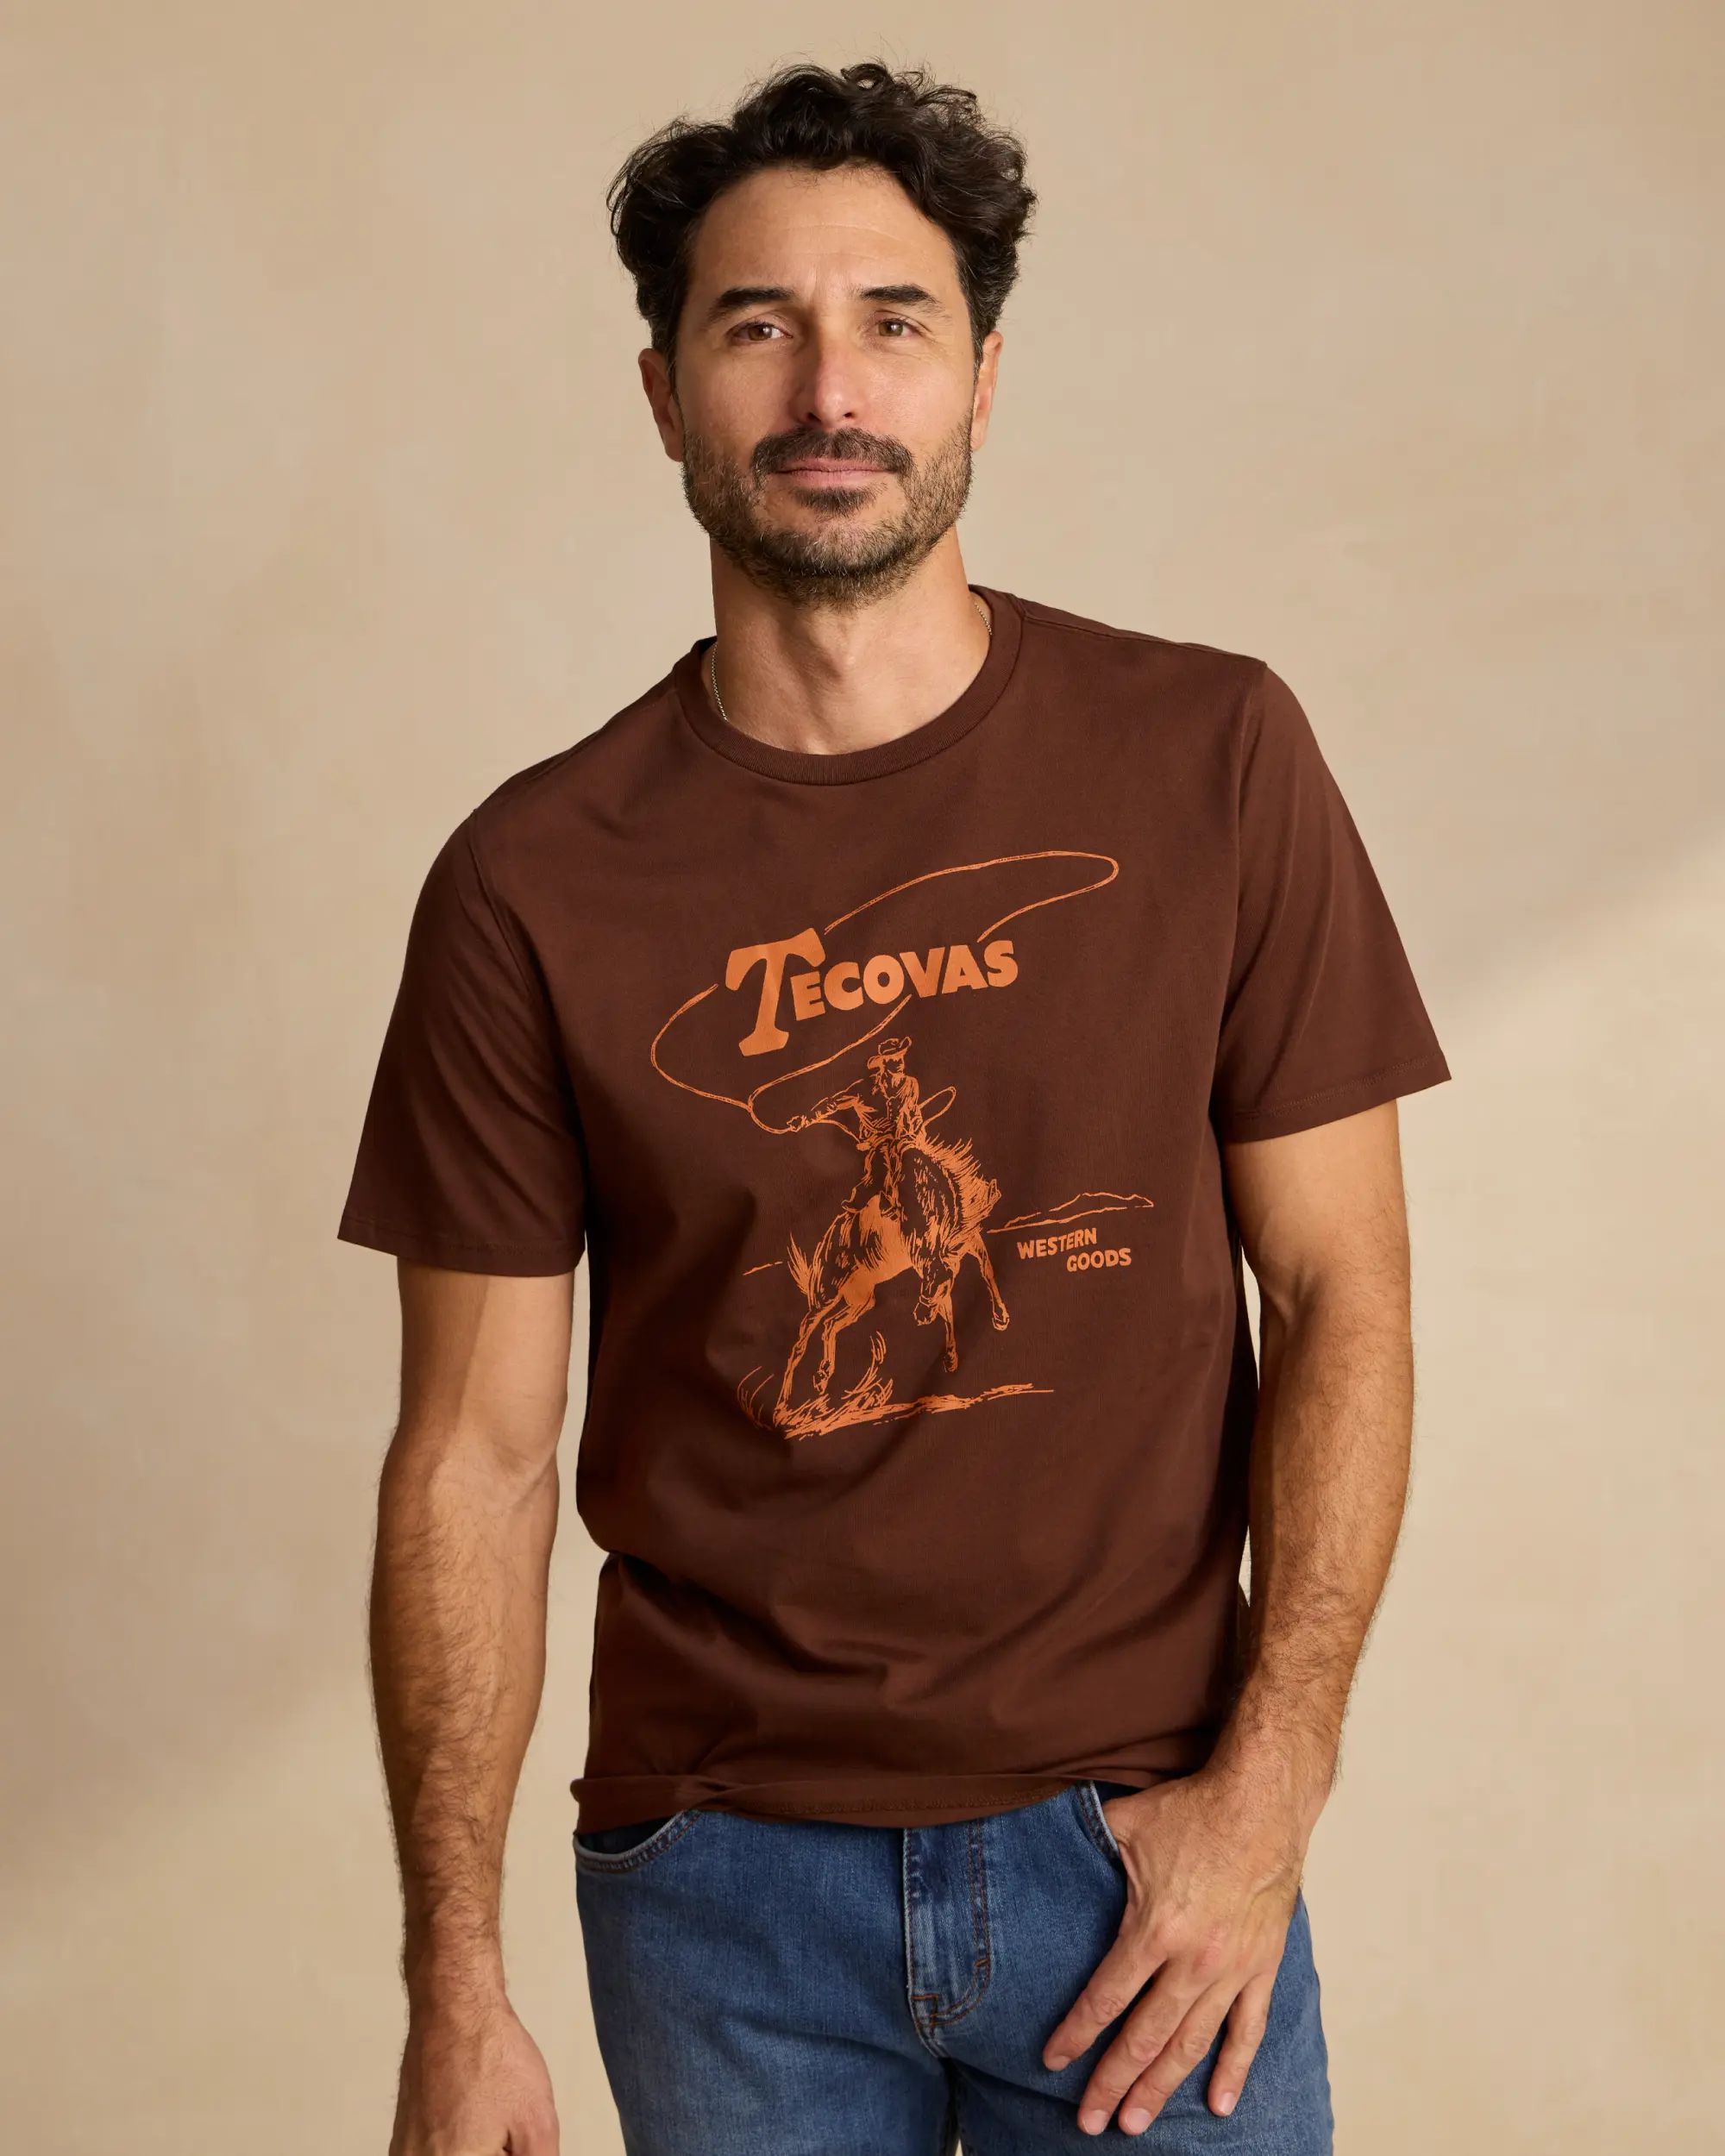 Men's Tecovas Rope Western Goods Tee - Brown/Orange | Tecovas | Tecovas